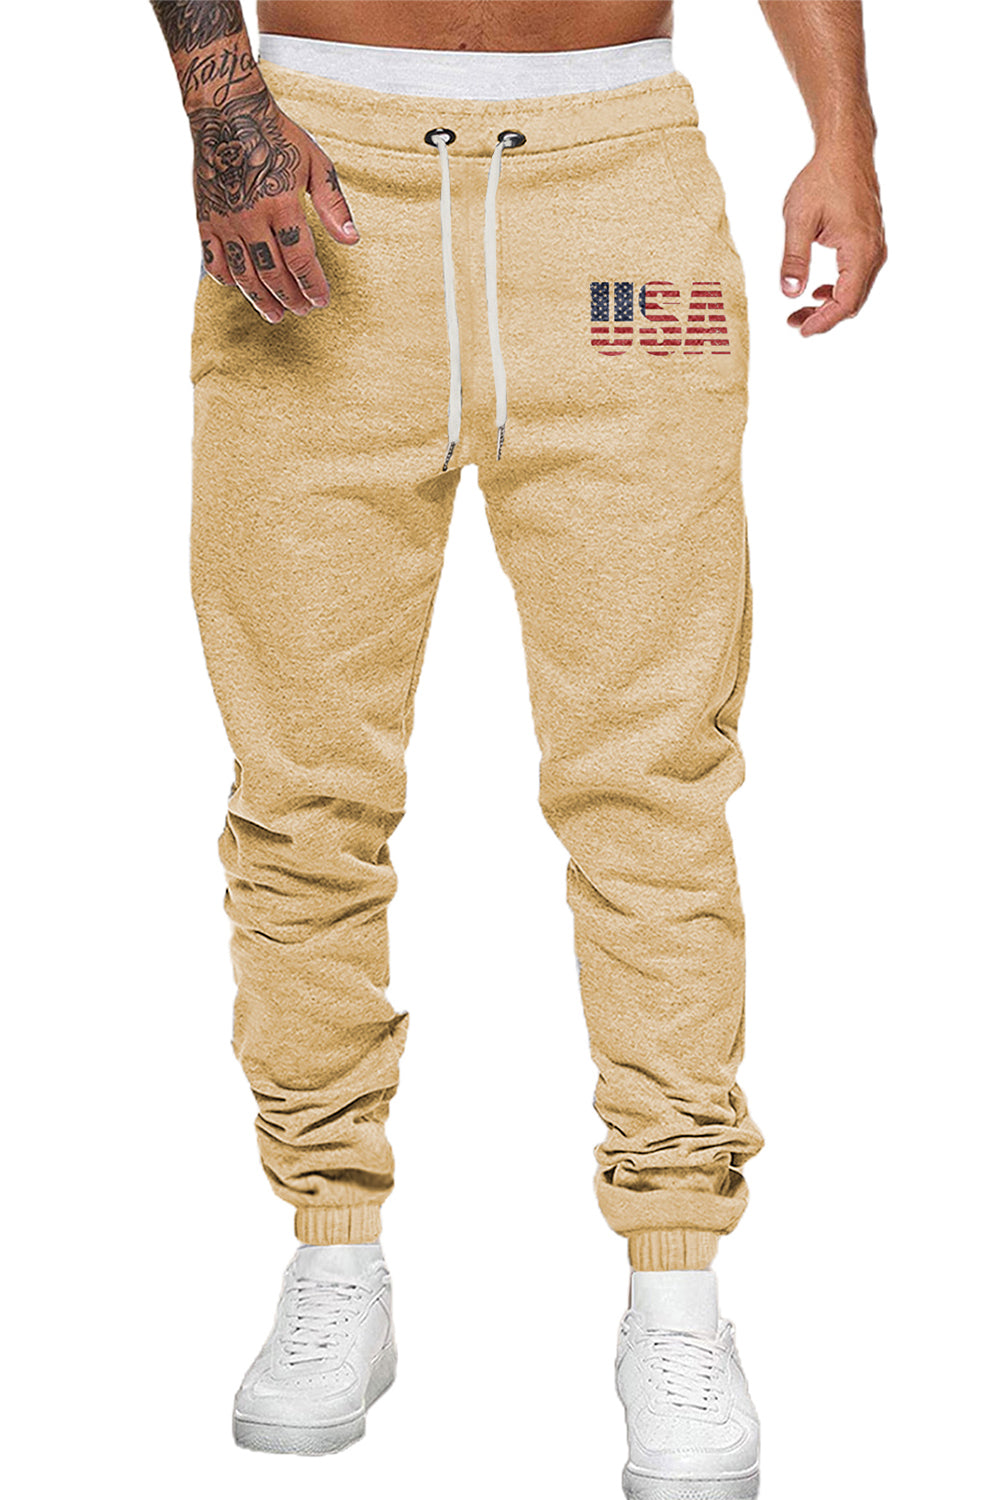 Apricot USA Print Drawstring Waist Men's Sweatpants Men's Pants JT's Designer Fashion